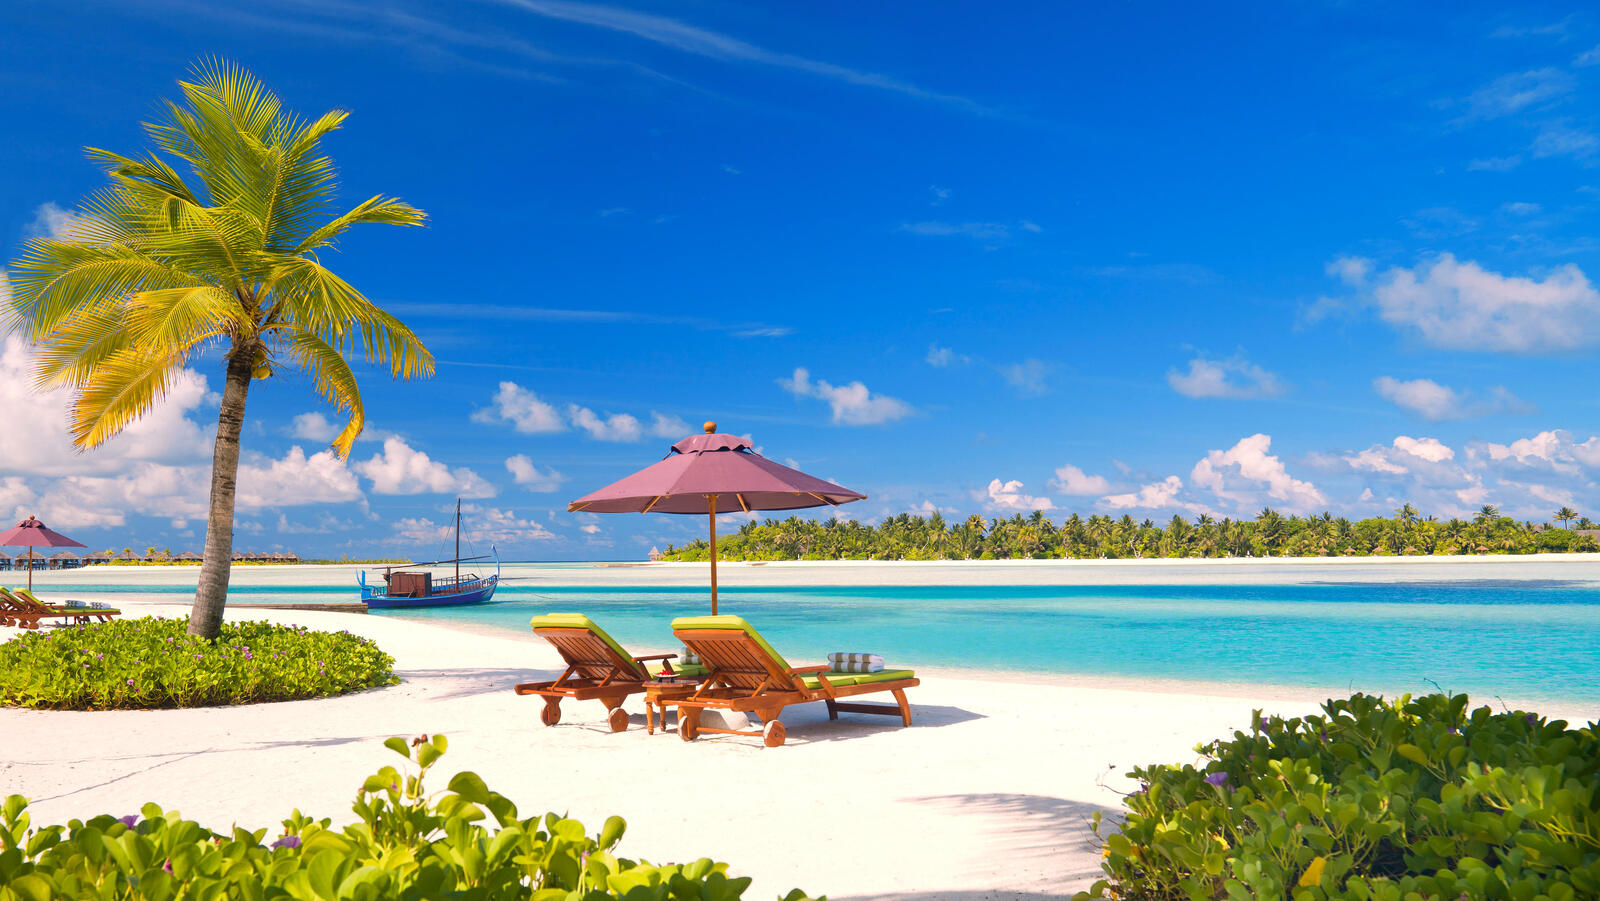 Wallpapers rest maldives beach on the desktop